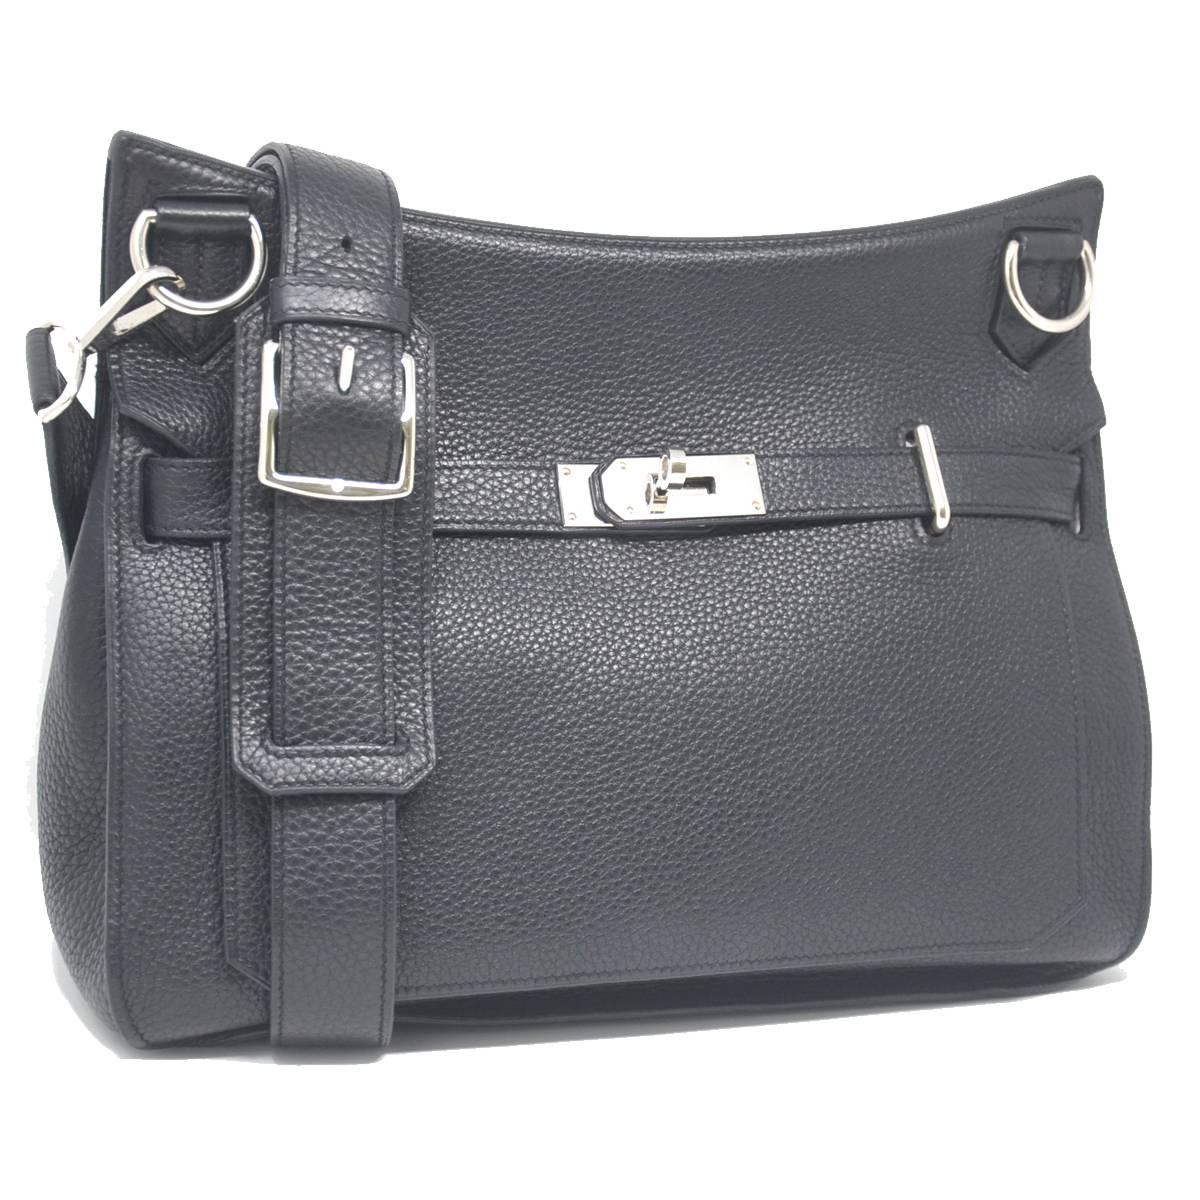 Company - HERMES
Model - Jypsiere 34
Color - Black
Style - Shoulder Bag
Material - Leather
Measurements - 13